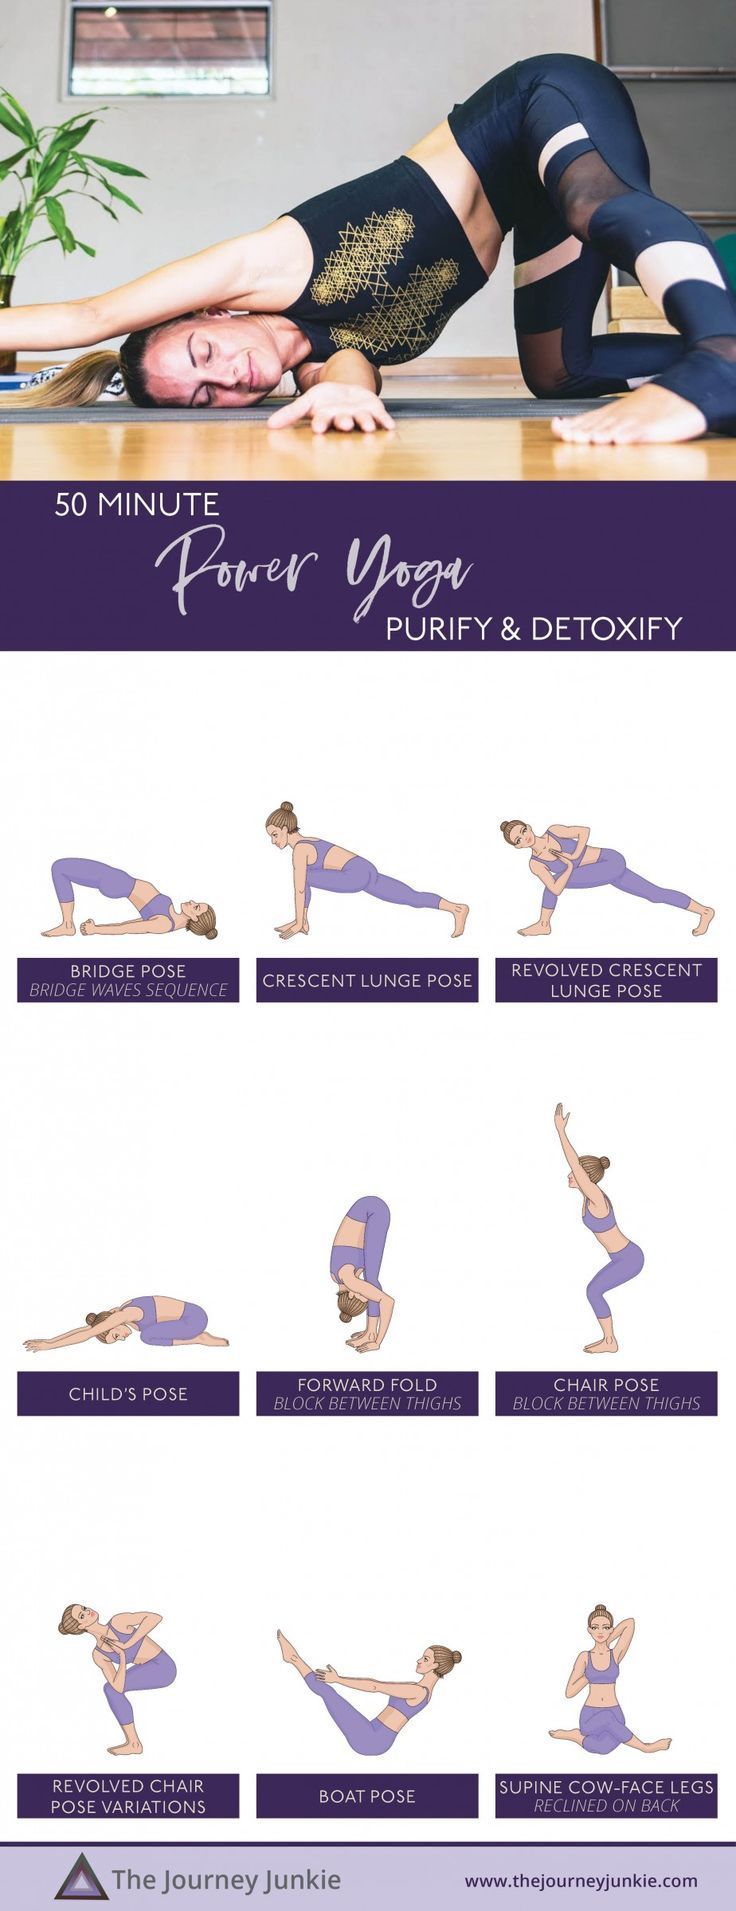 Śauca Power Hatha Yoga Class to Purify & Detoxify - The Journey Junkie